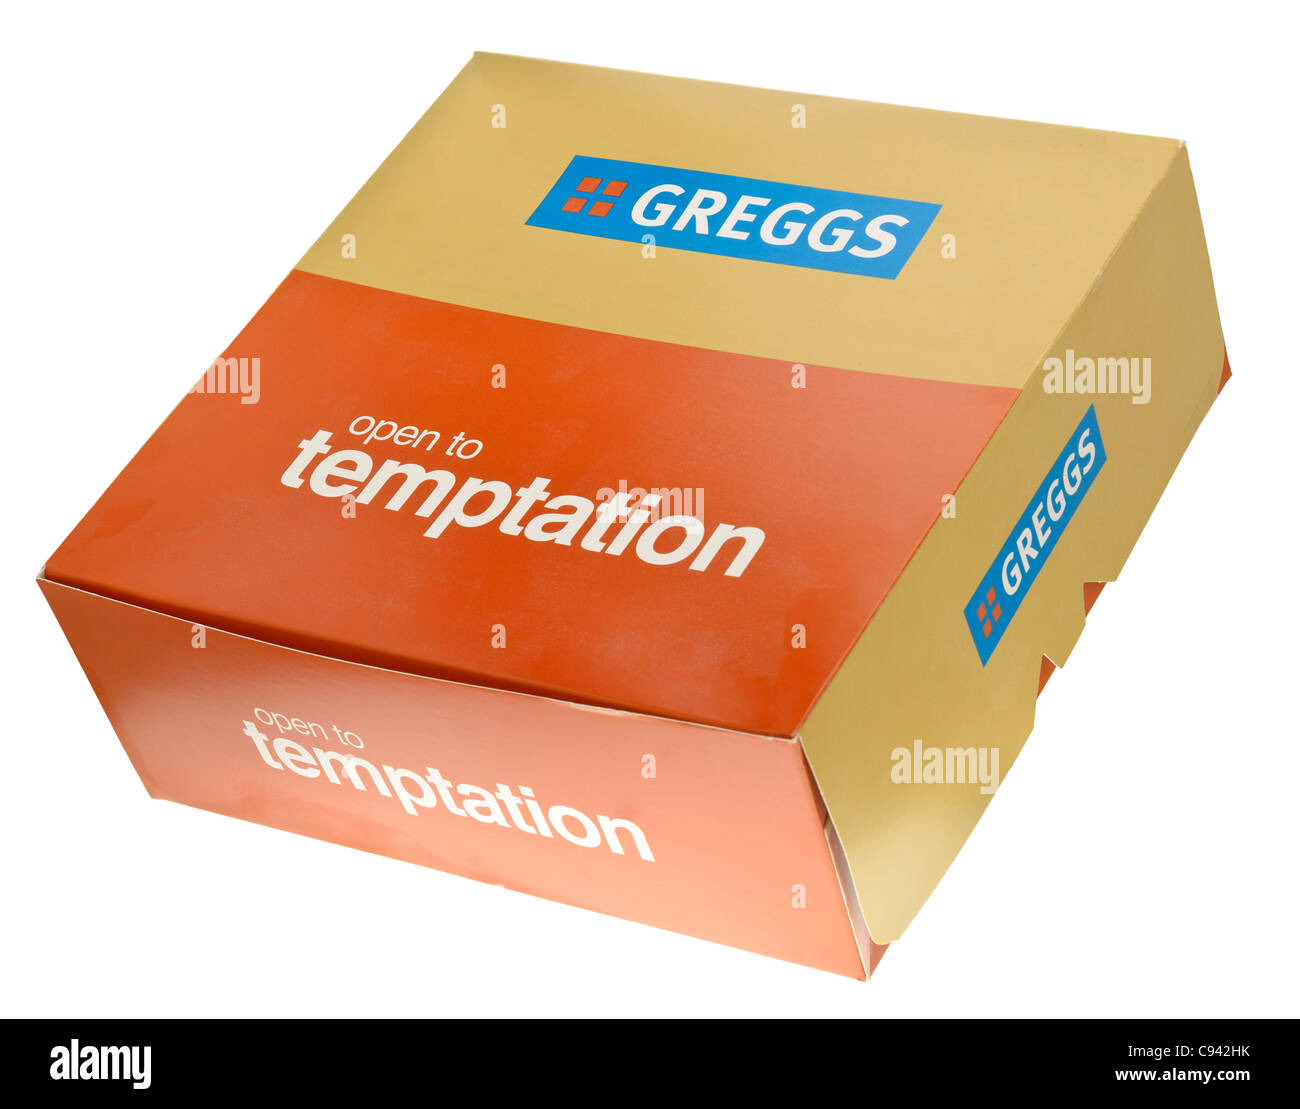 Greggs Box Kuchen Stockfoto